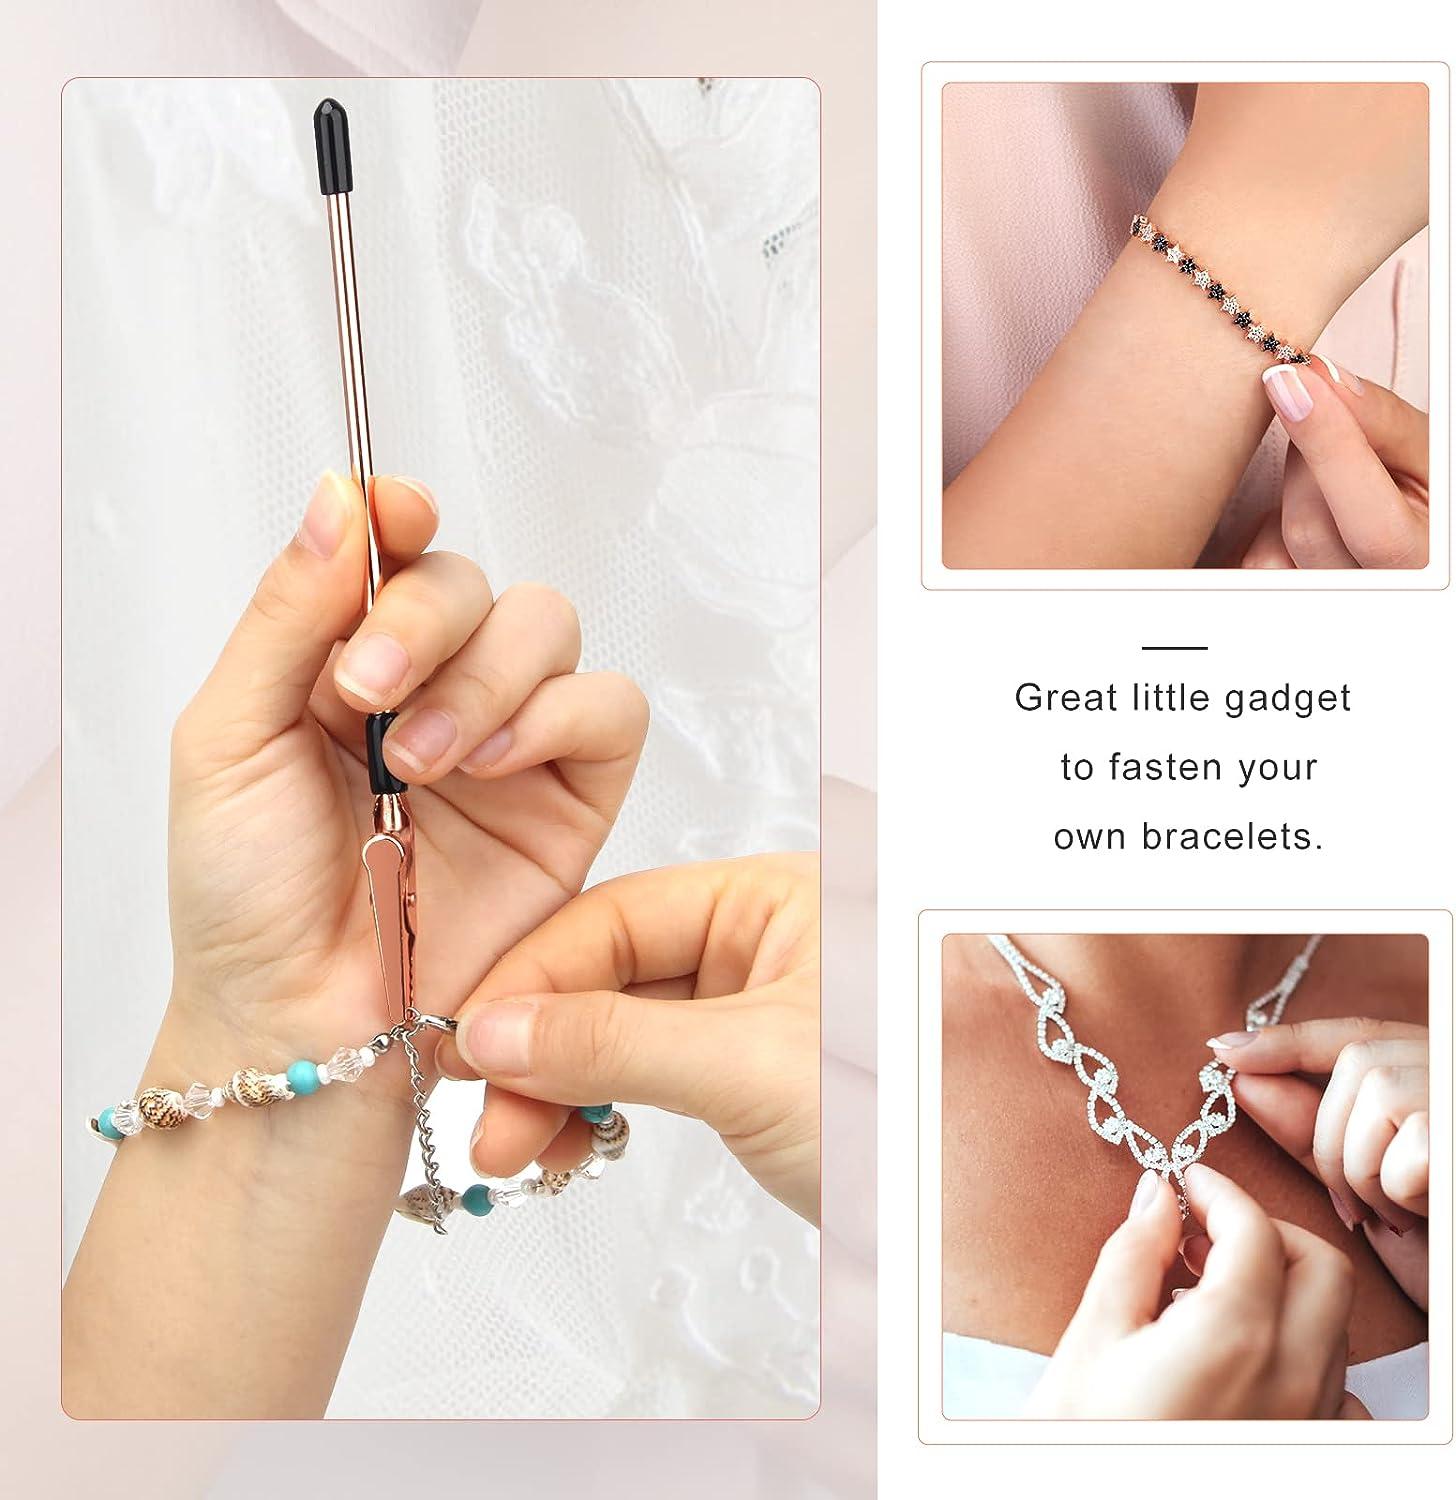 Bracelet Tool Jewelry Helper Fastening Clasps and Hooking